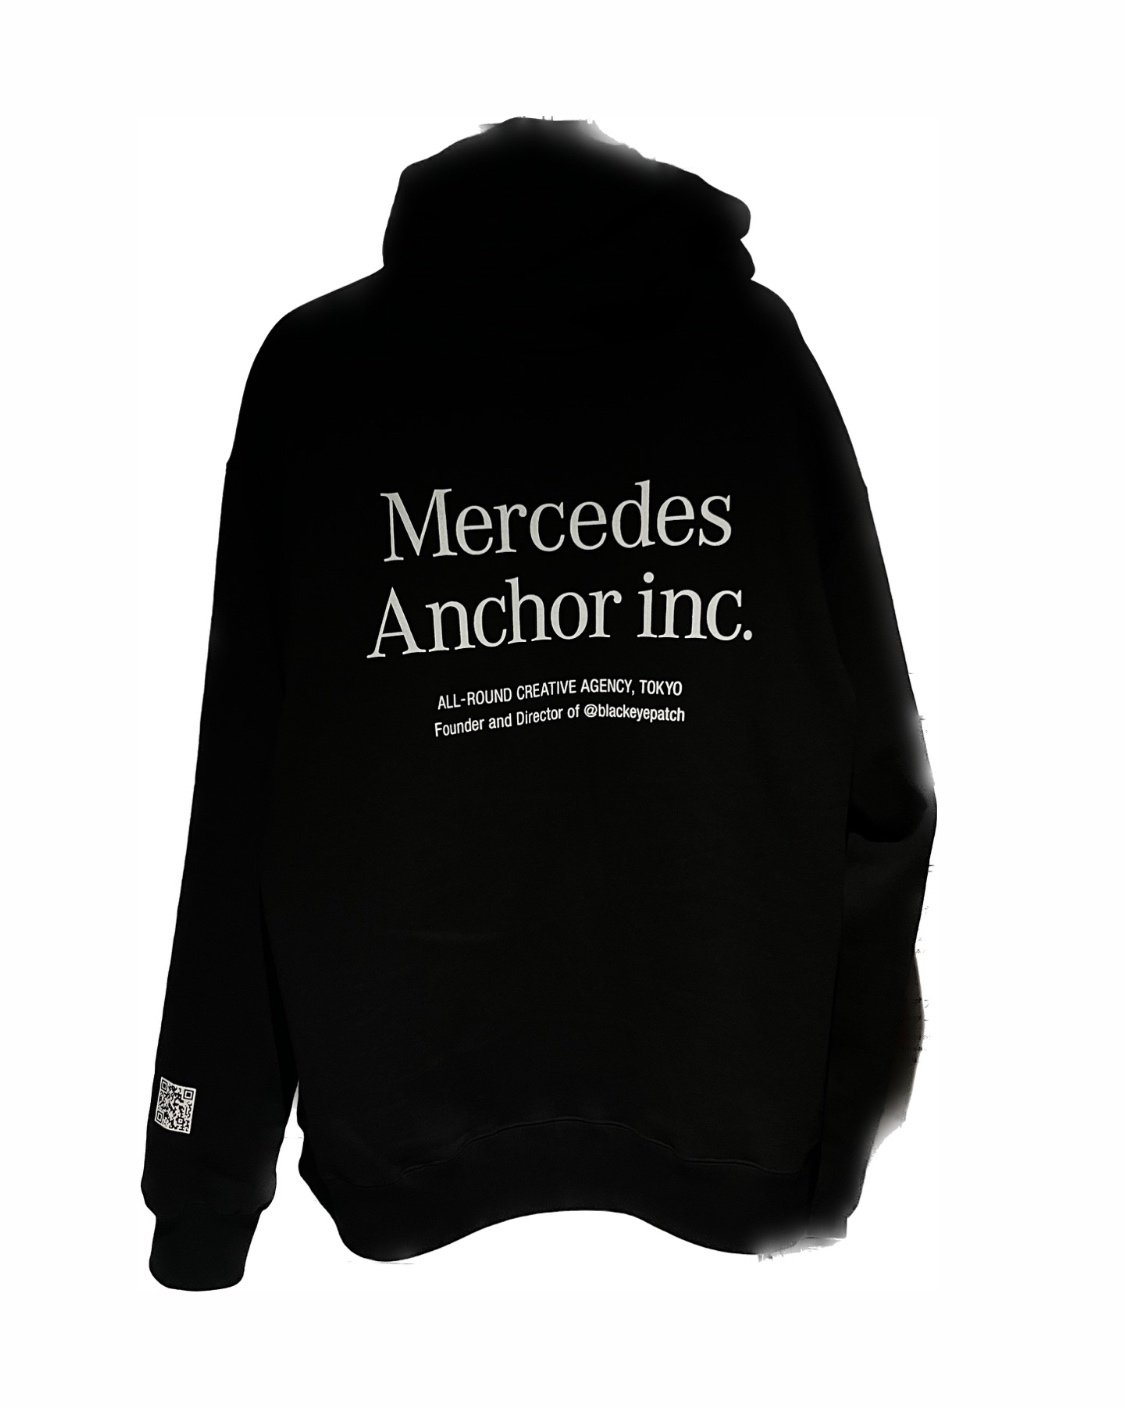 Mersedes Anchor Inc.